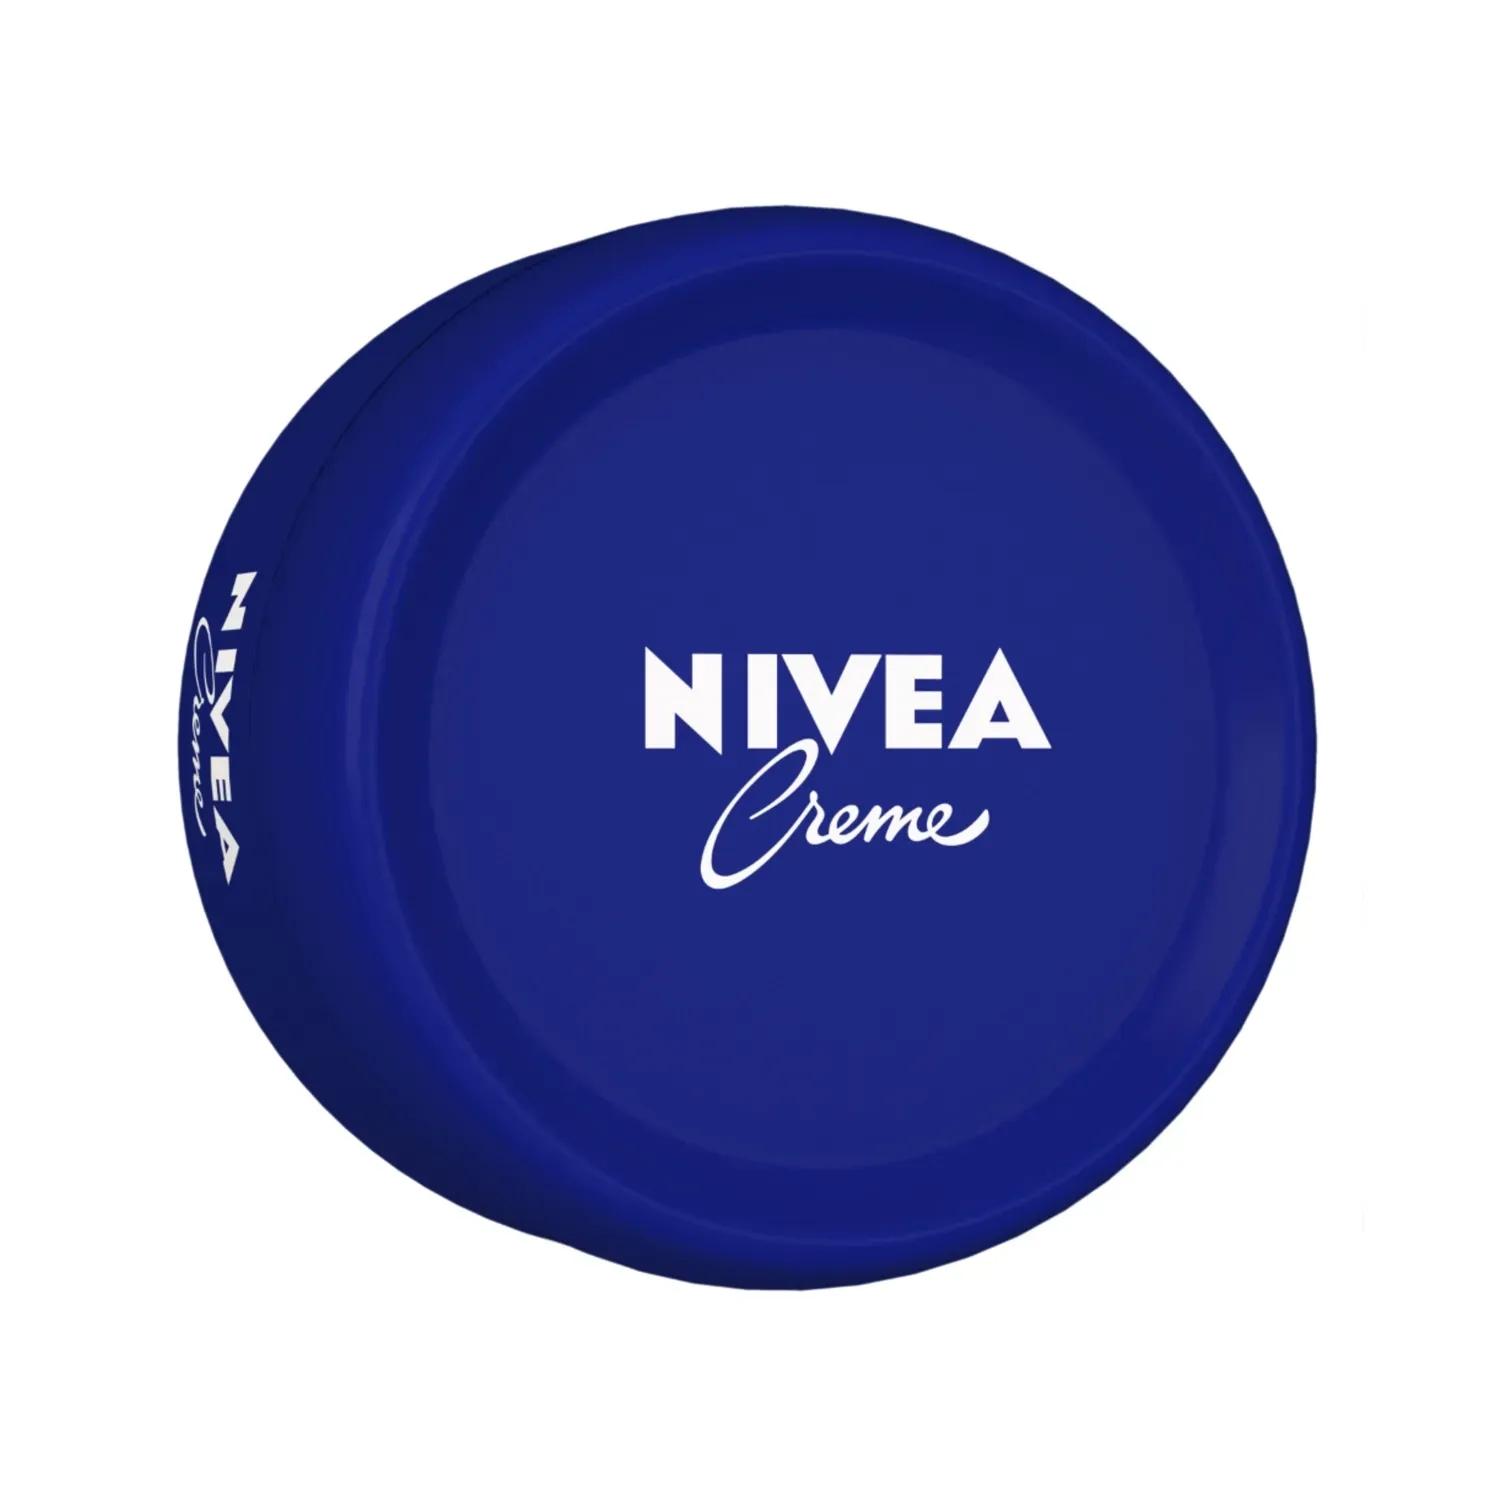 nivea all season multi-purpose face moisturizer cream (100ml)